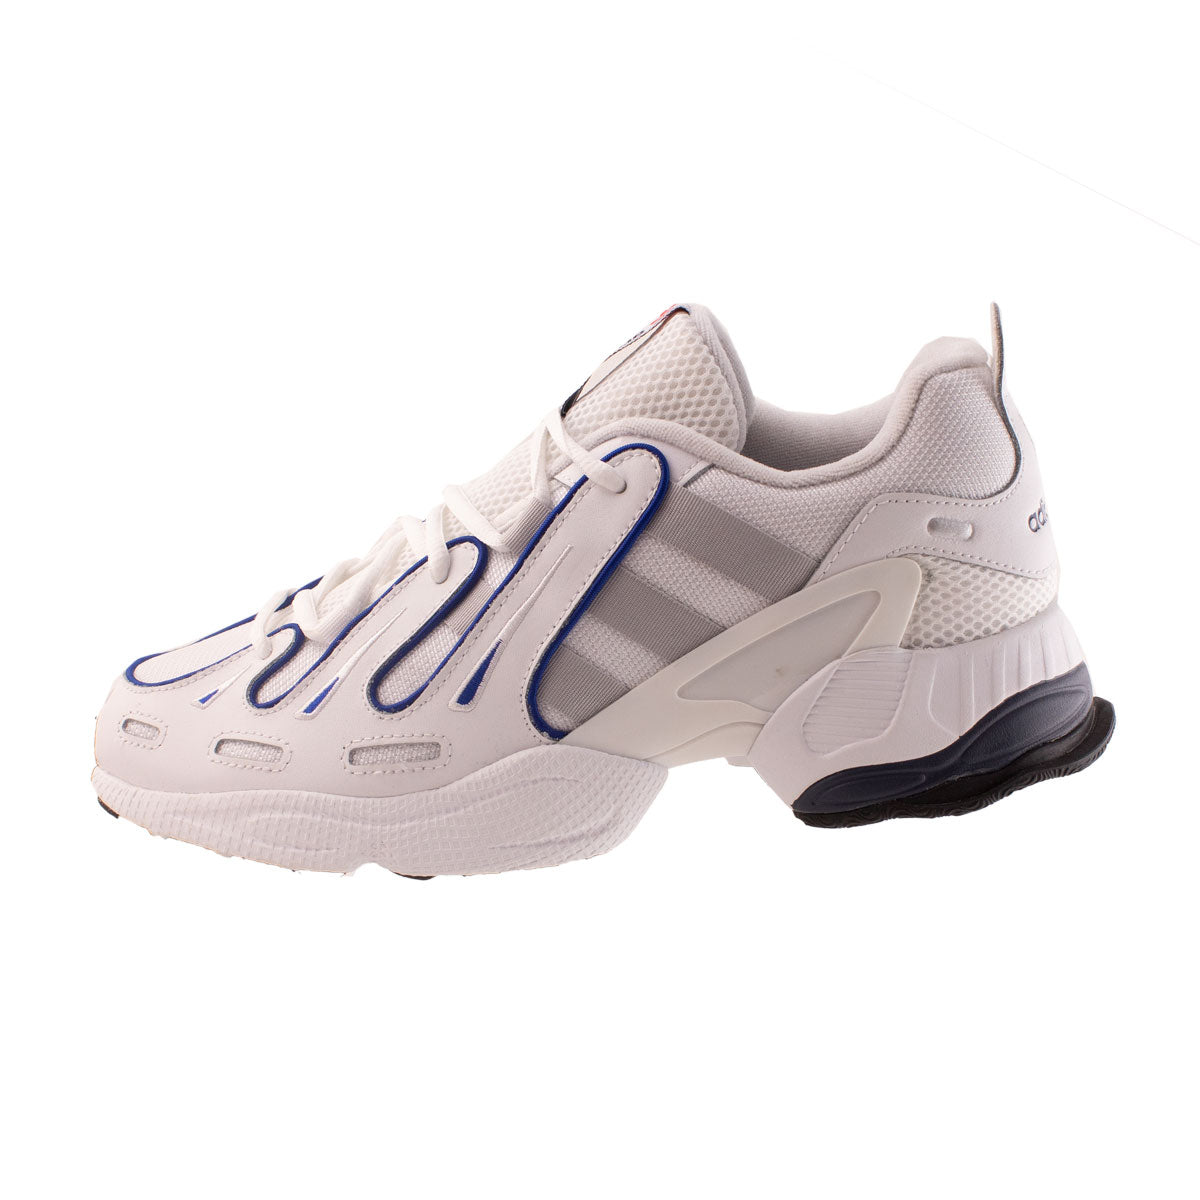 Adidas Originals EQT GAZELLE Herren Schuhe Sportschuhe Sneaker Weiß Leder EE4806-1